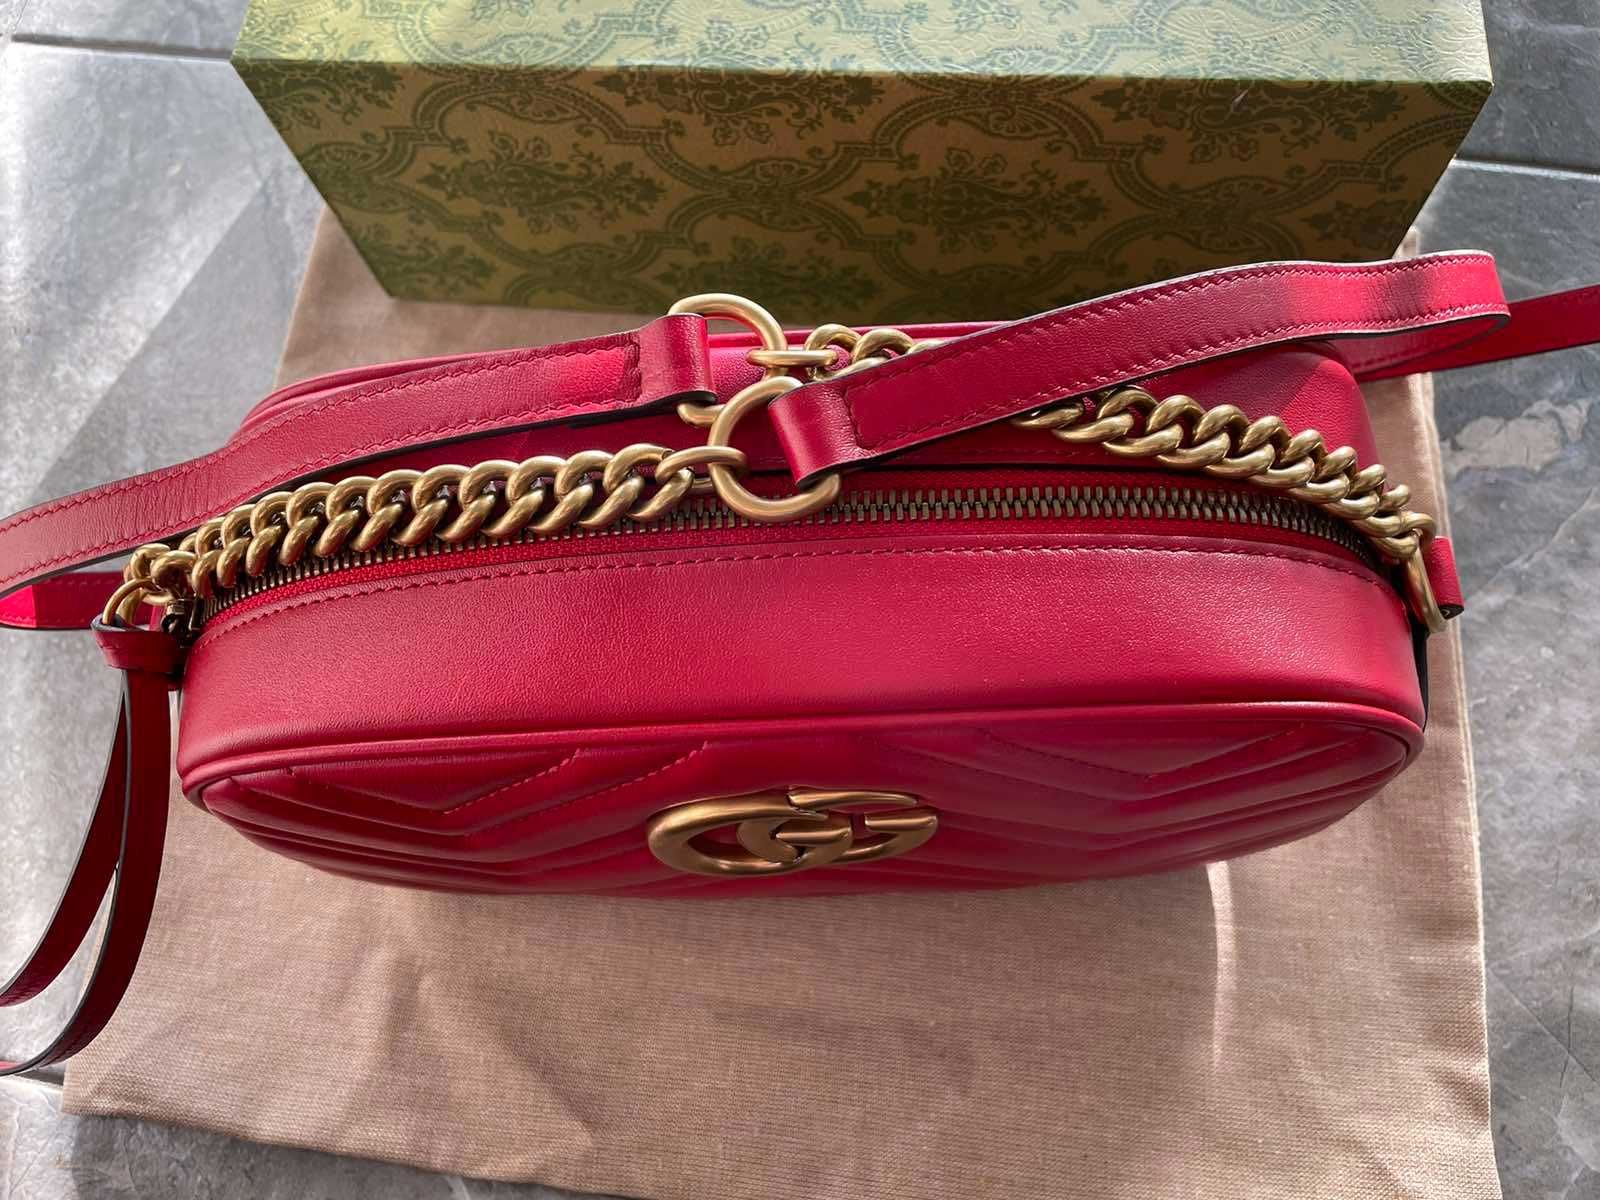 Geanta Gucci din piele roșie Gucci Marmont maner si lant, autentica